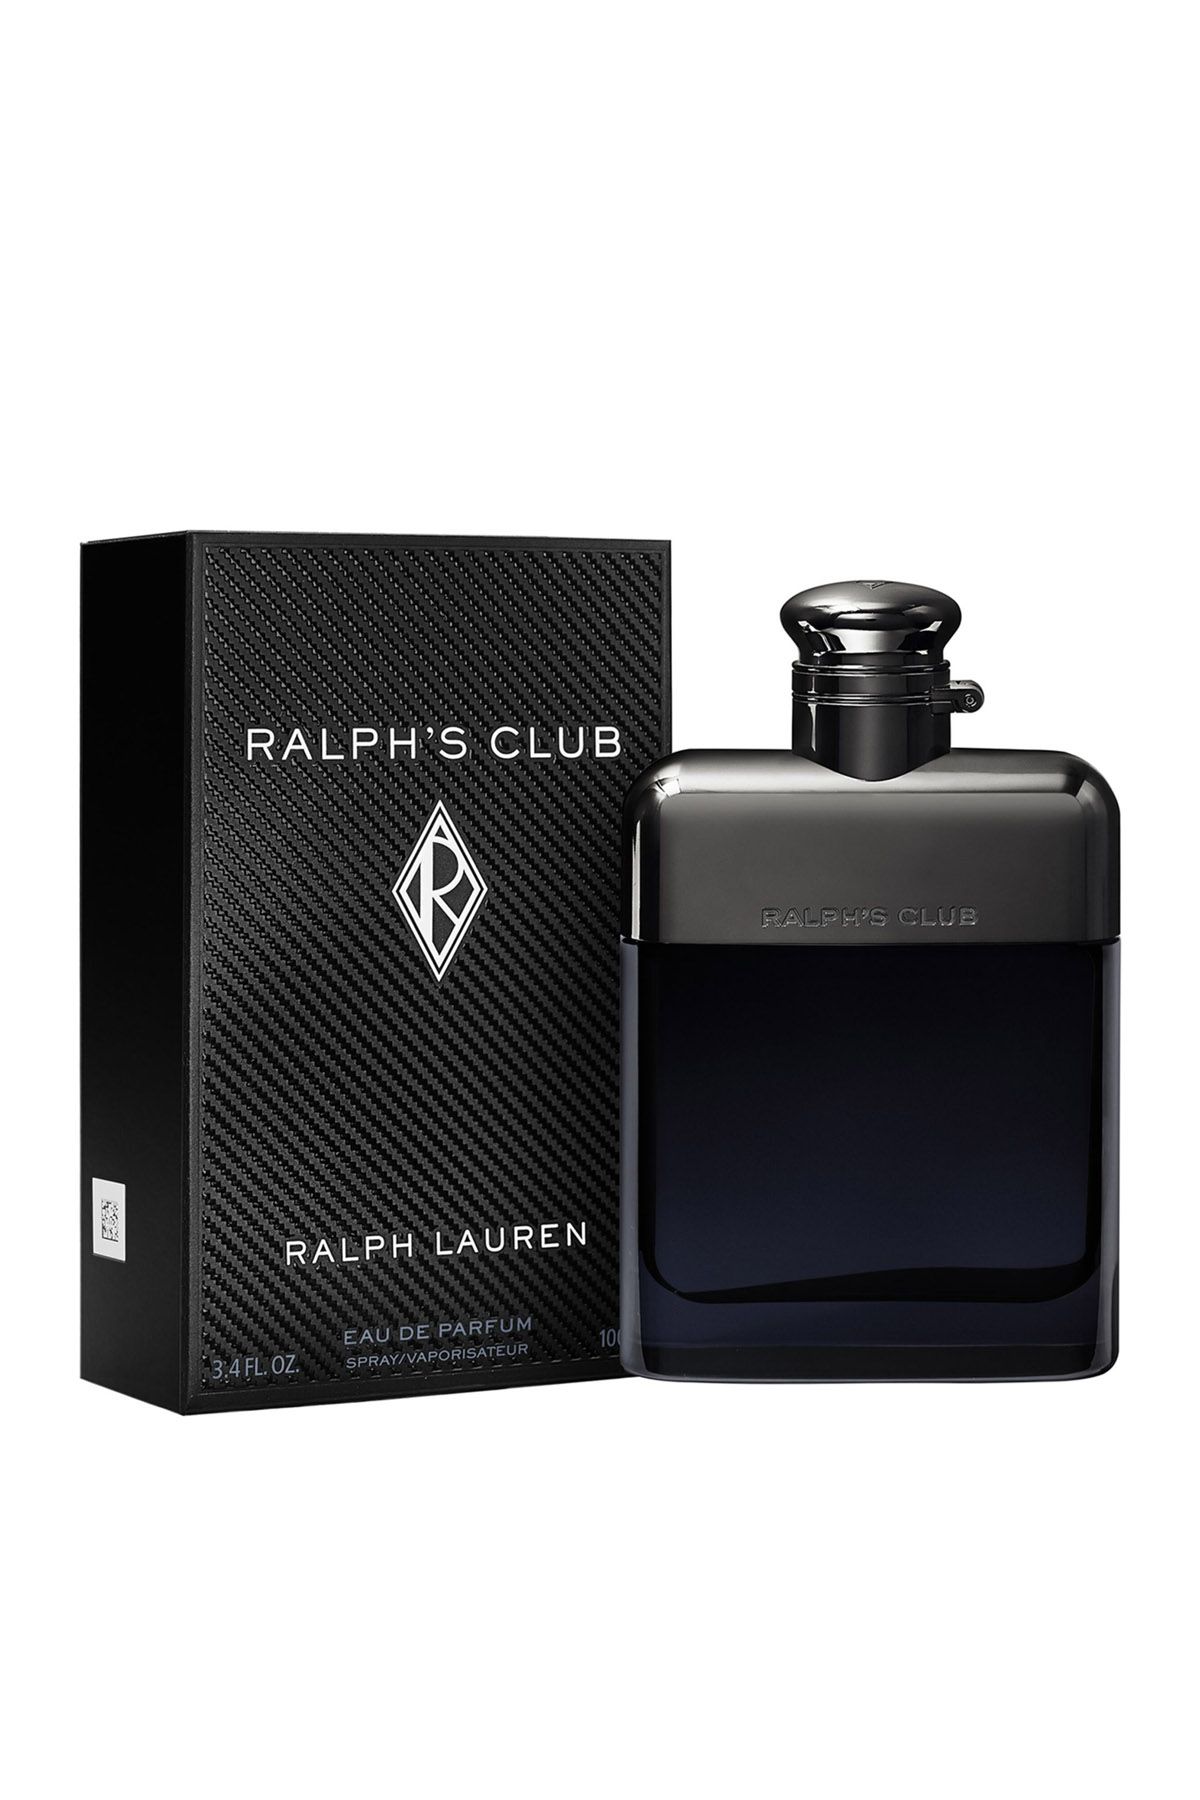 Ralph Lauren Ralph'S Club Edp 100Ml